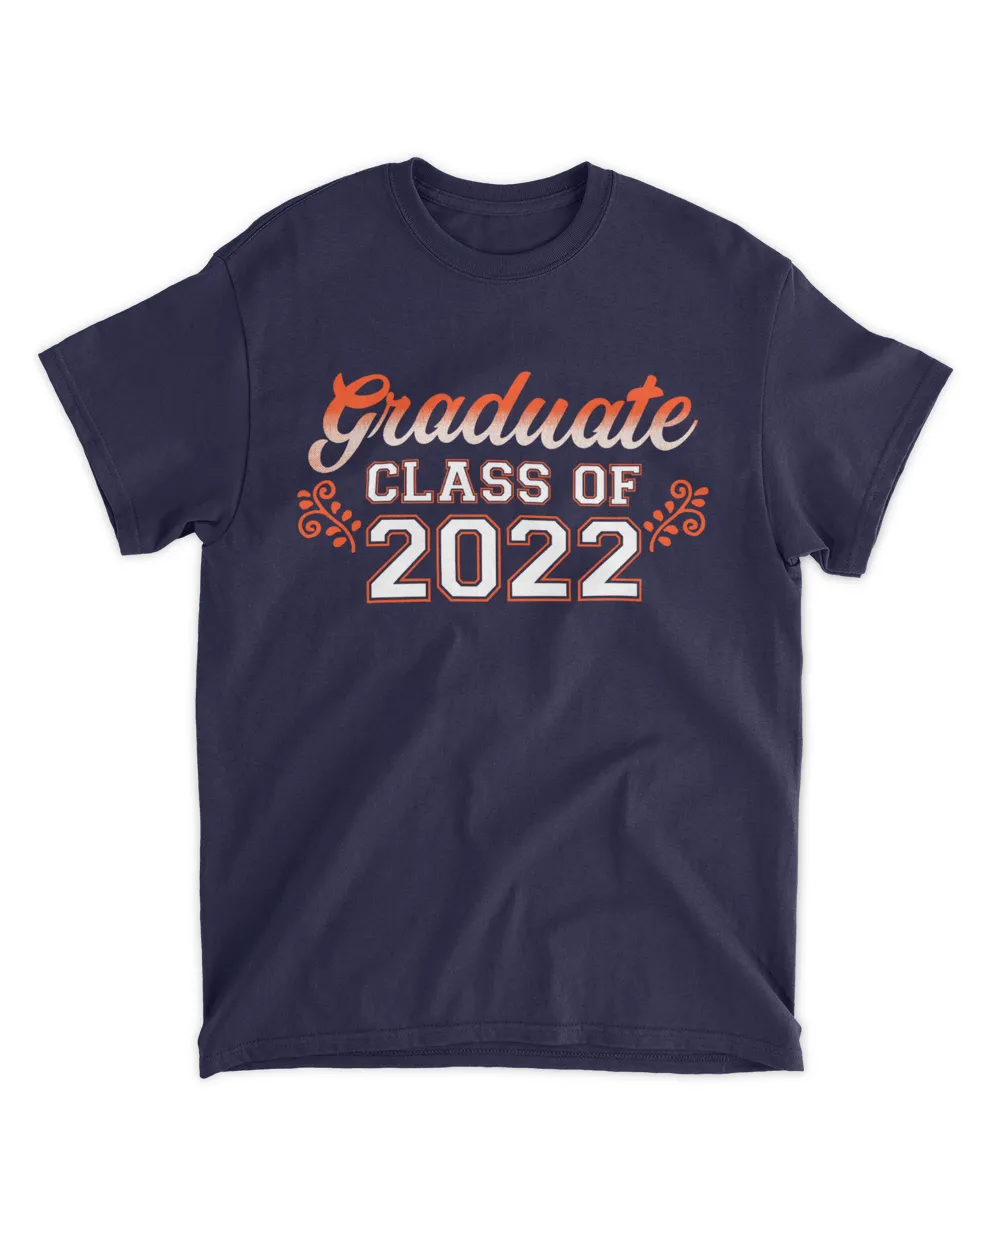 Graduate Class of 2022 UV1204